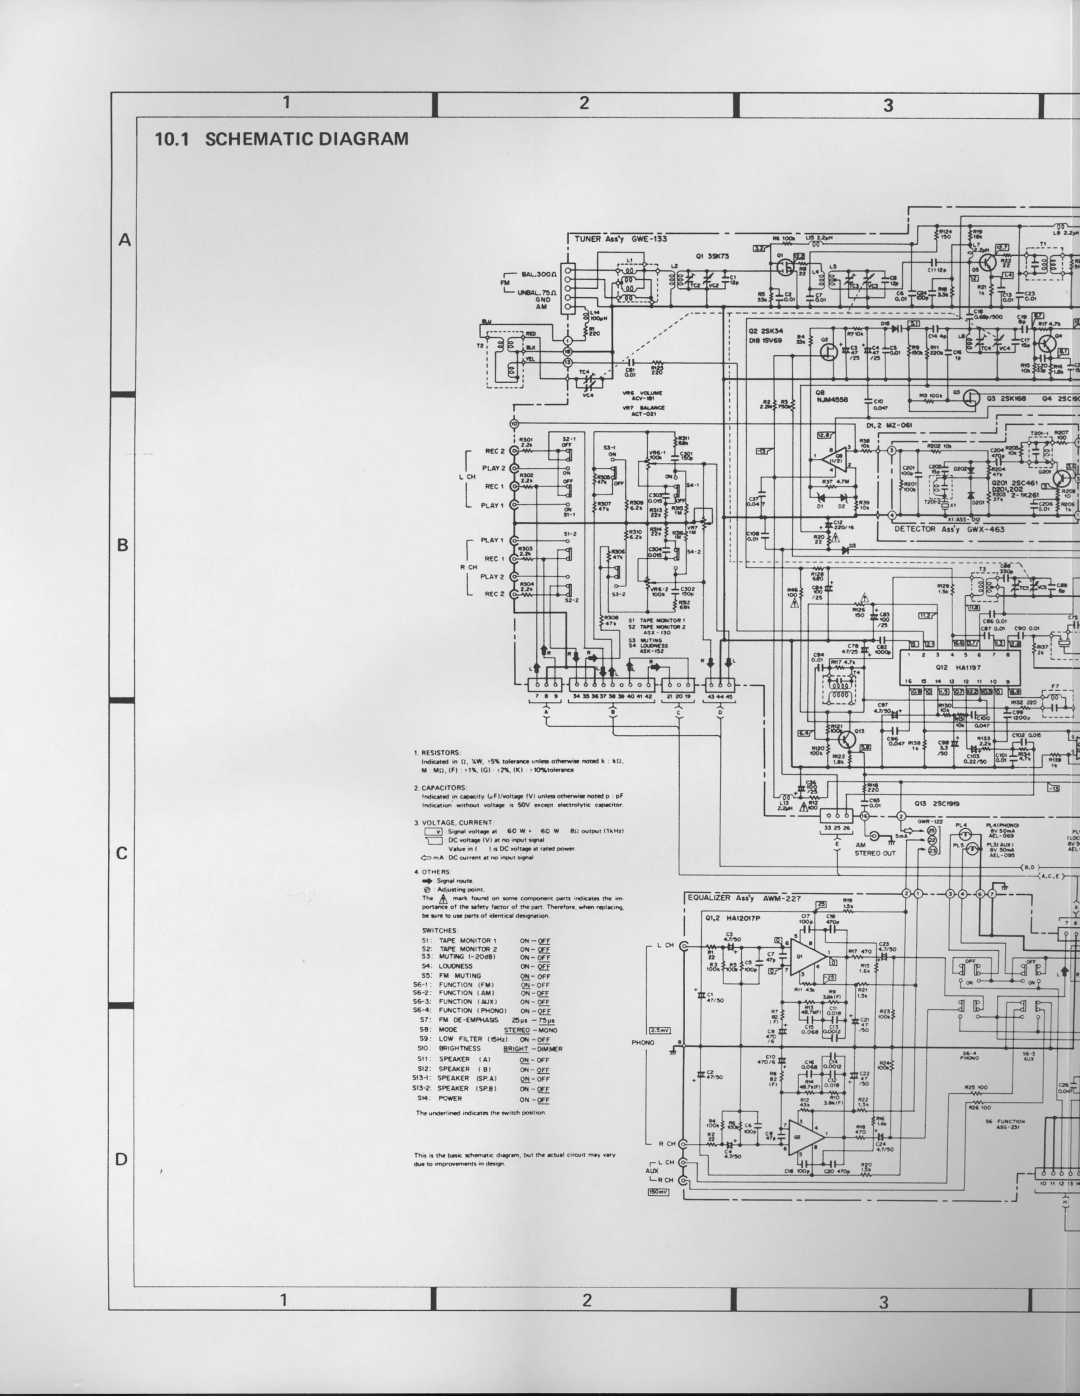 Pioneer SX-3800 manual Schematicdiagram, rruEs, o-fr, or -E 